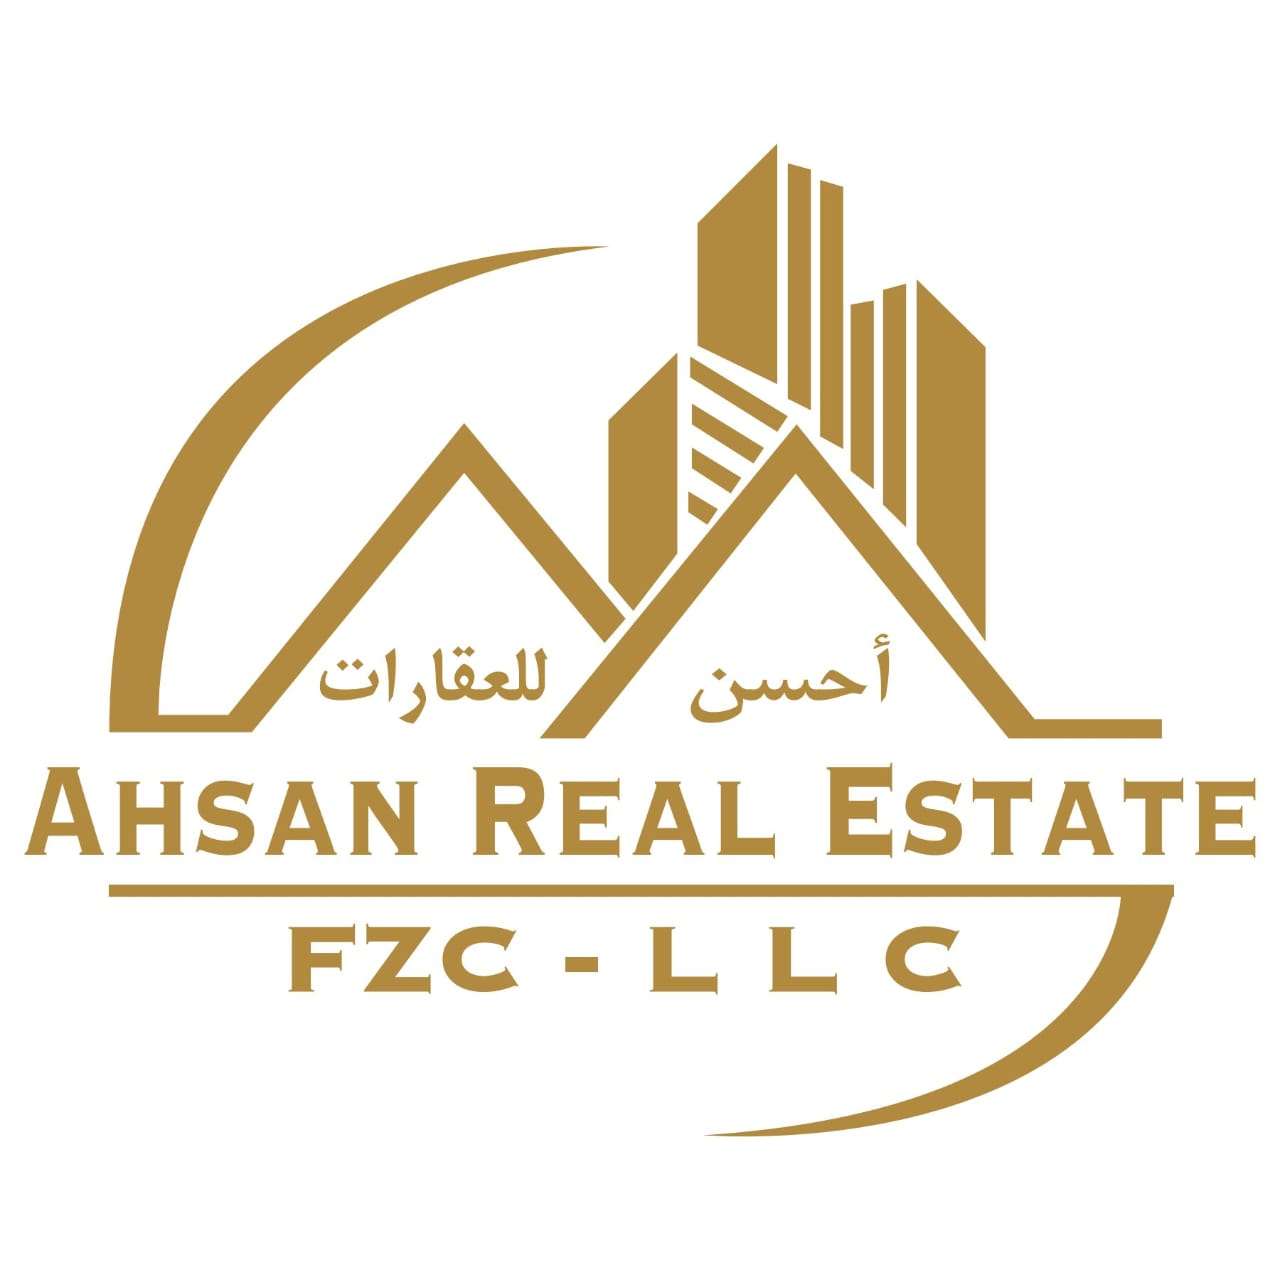 Ahsan Real Estate FZC LLC